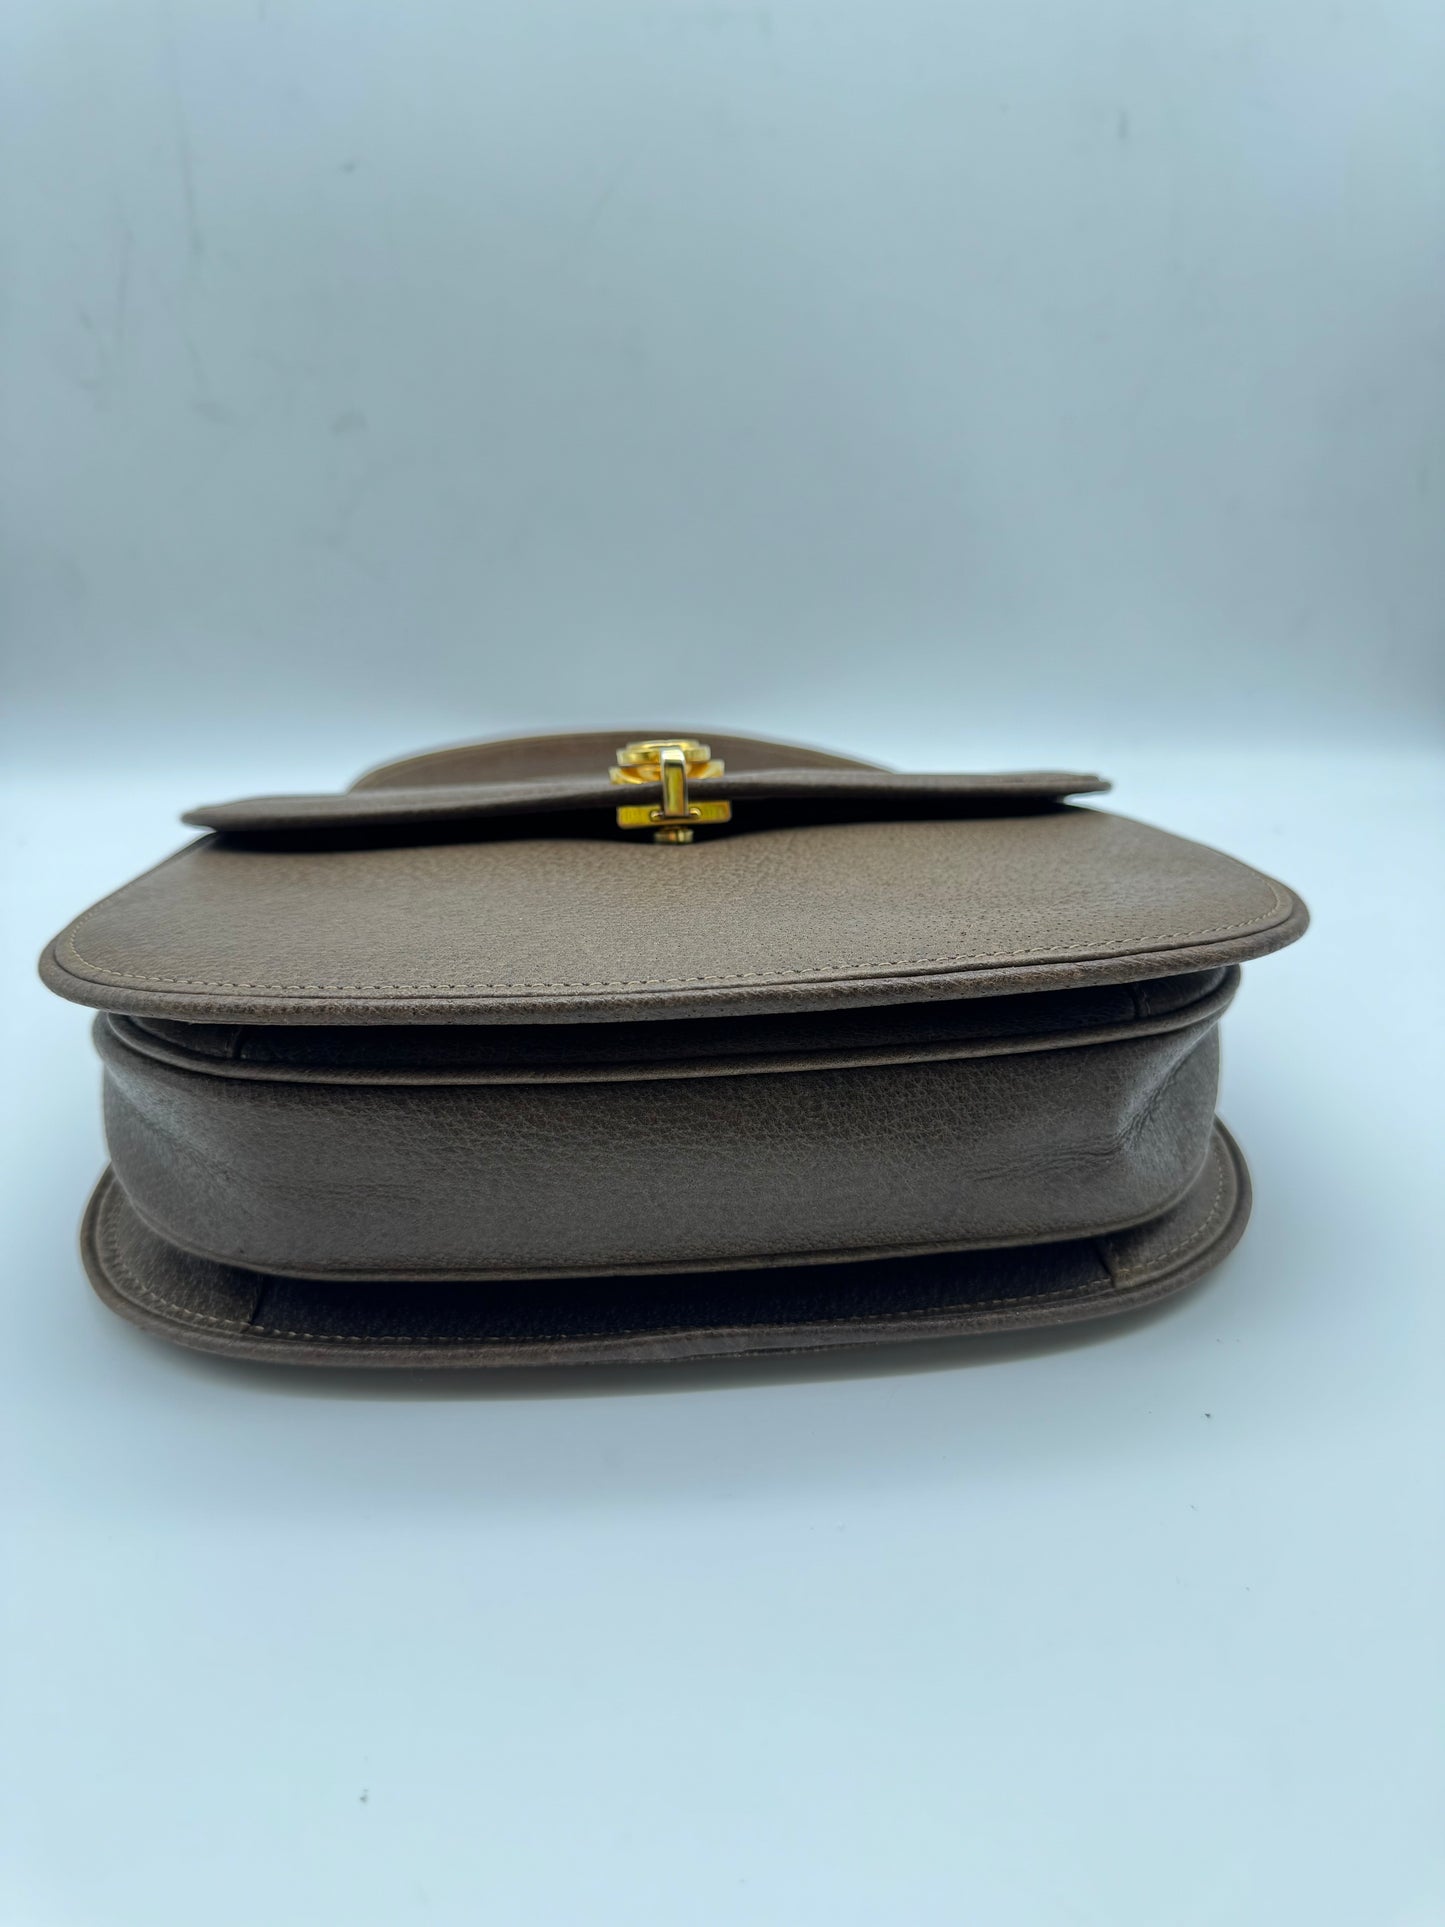 Authentic GUCCI Vintage Brown Leather Top Handbag